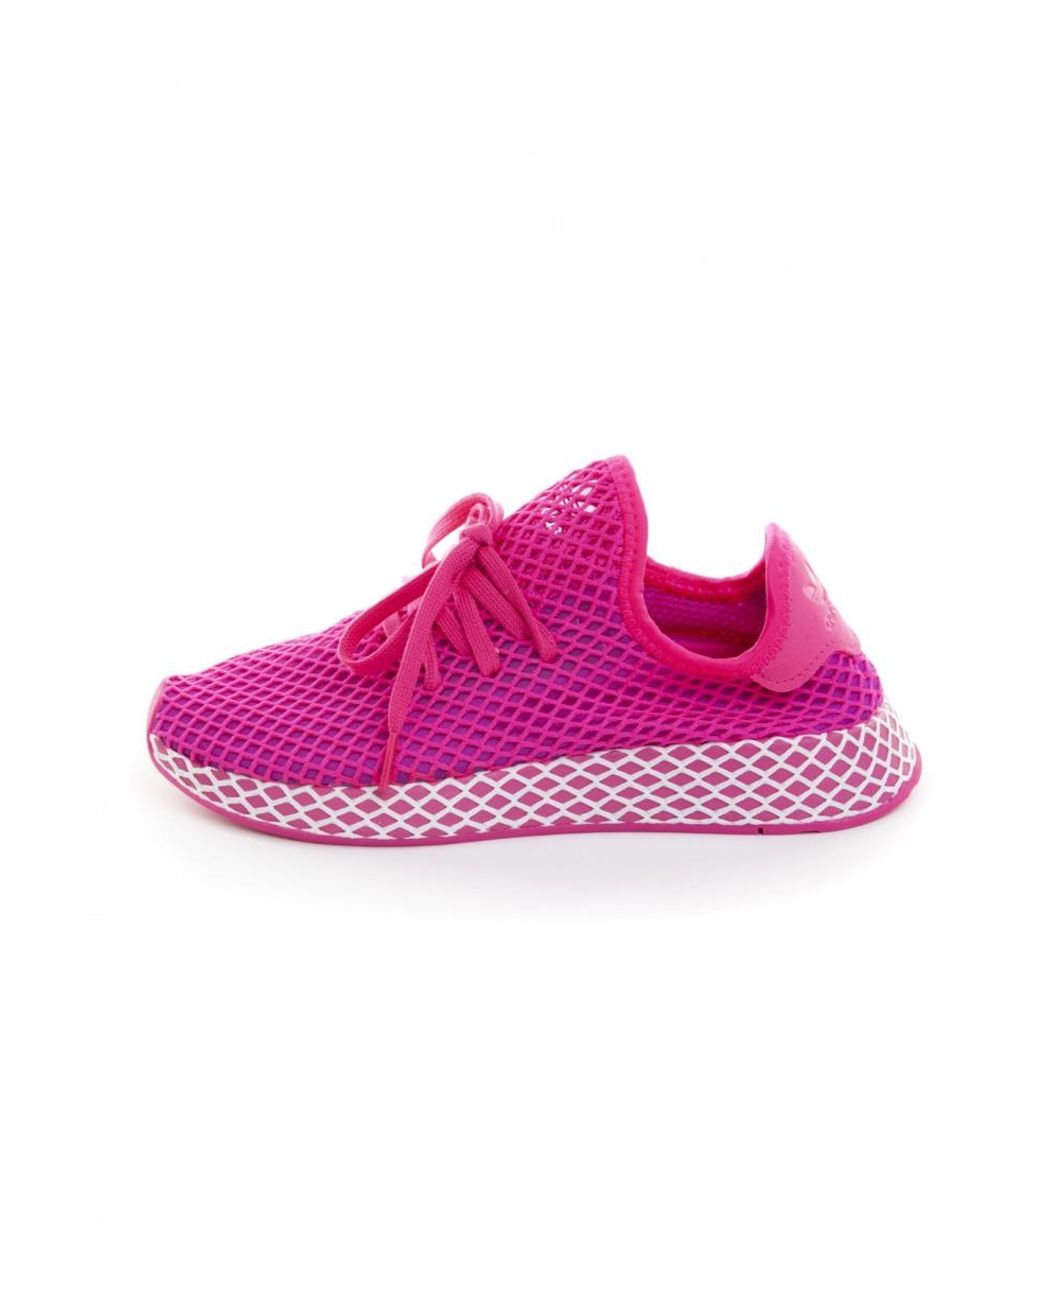 adidas Originals Deerupt Runner Fuchsia in Pink | Lyst